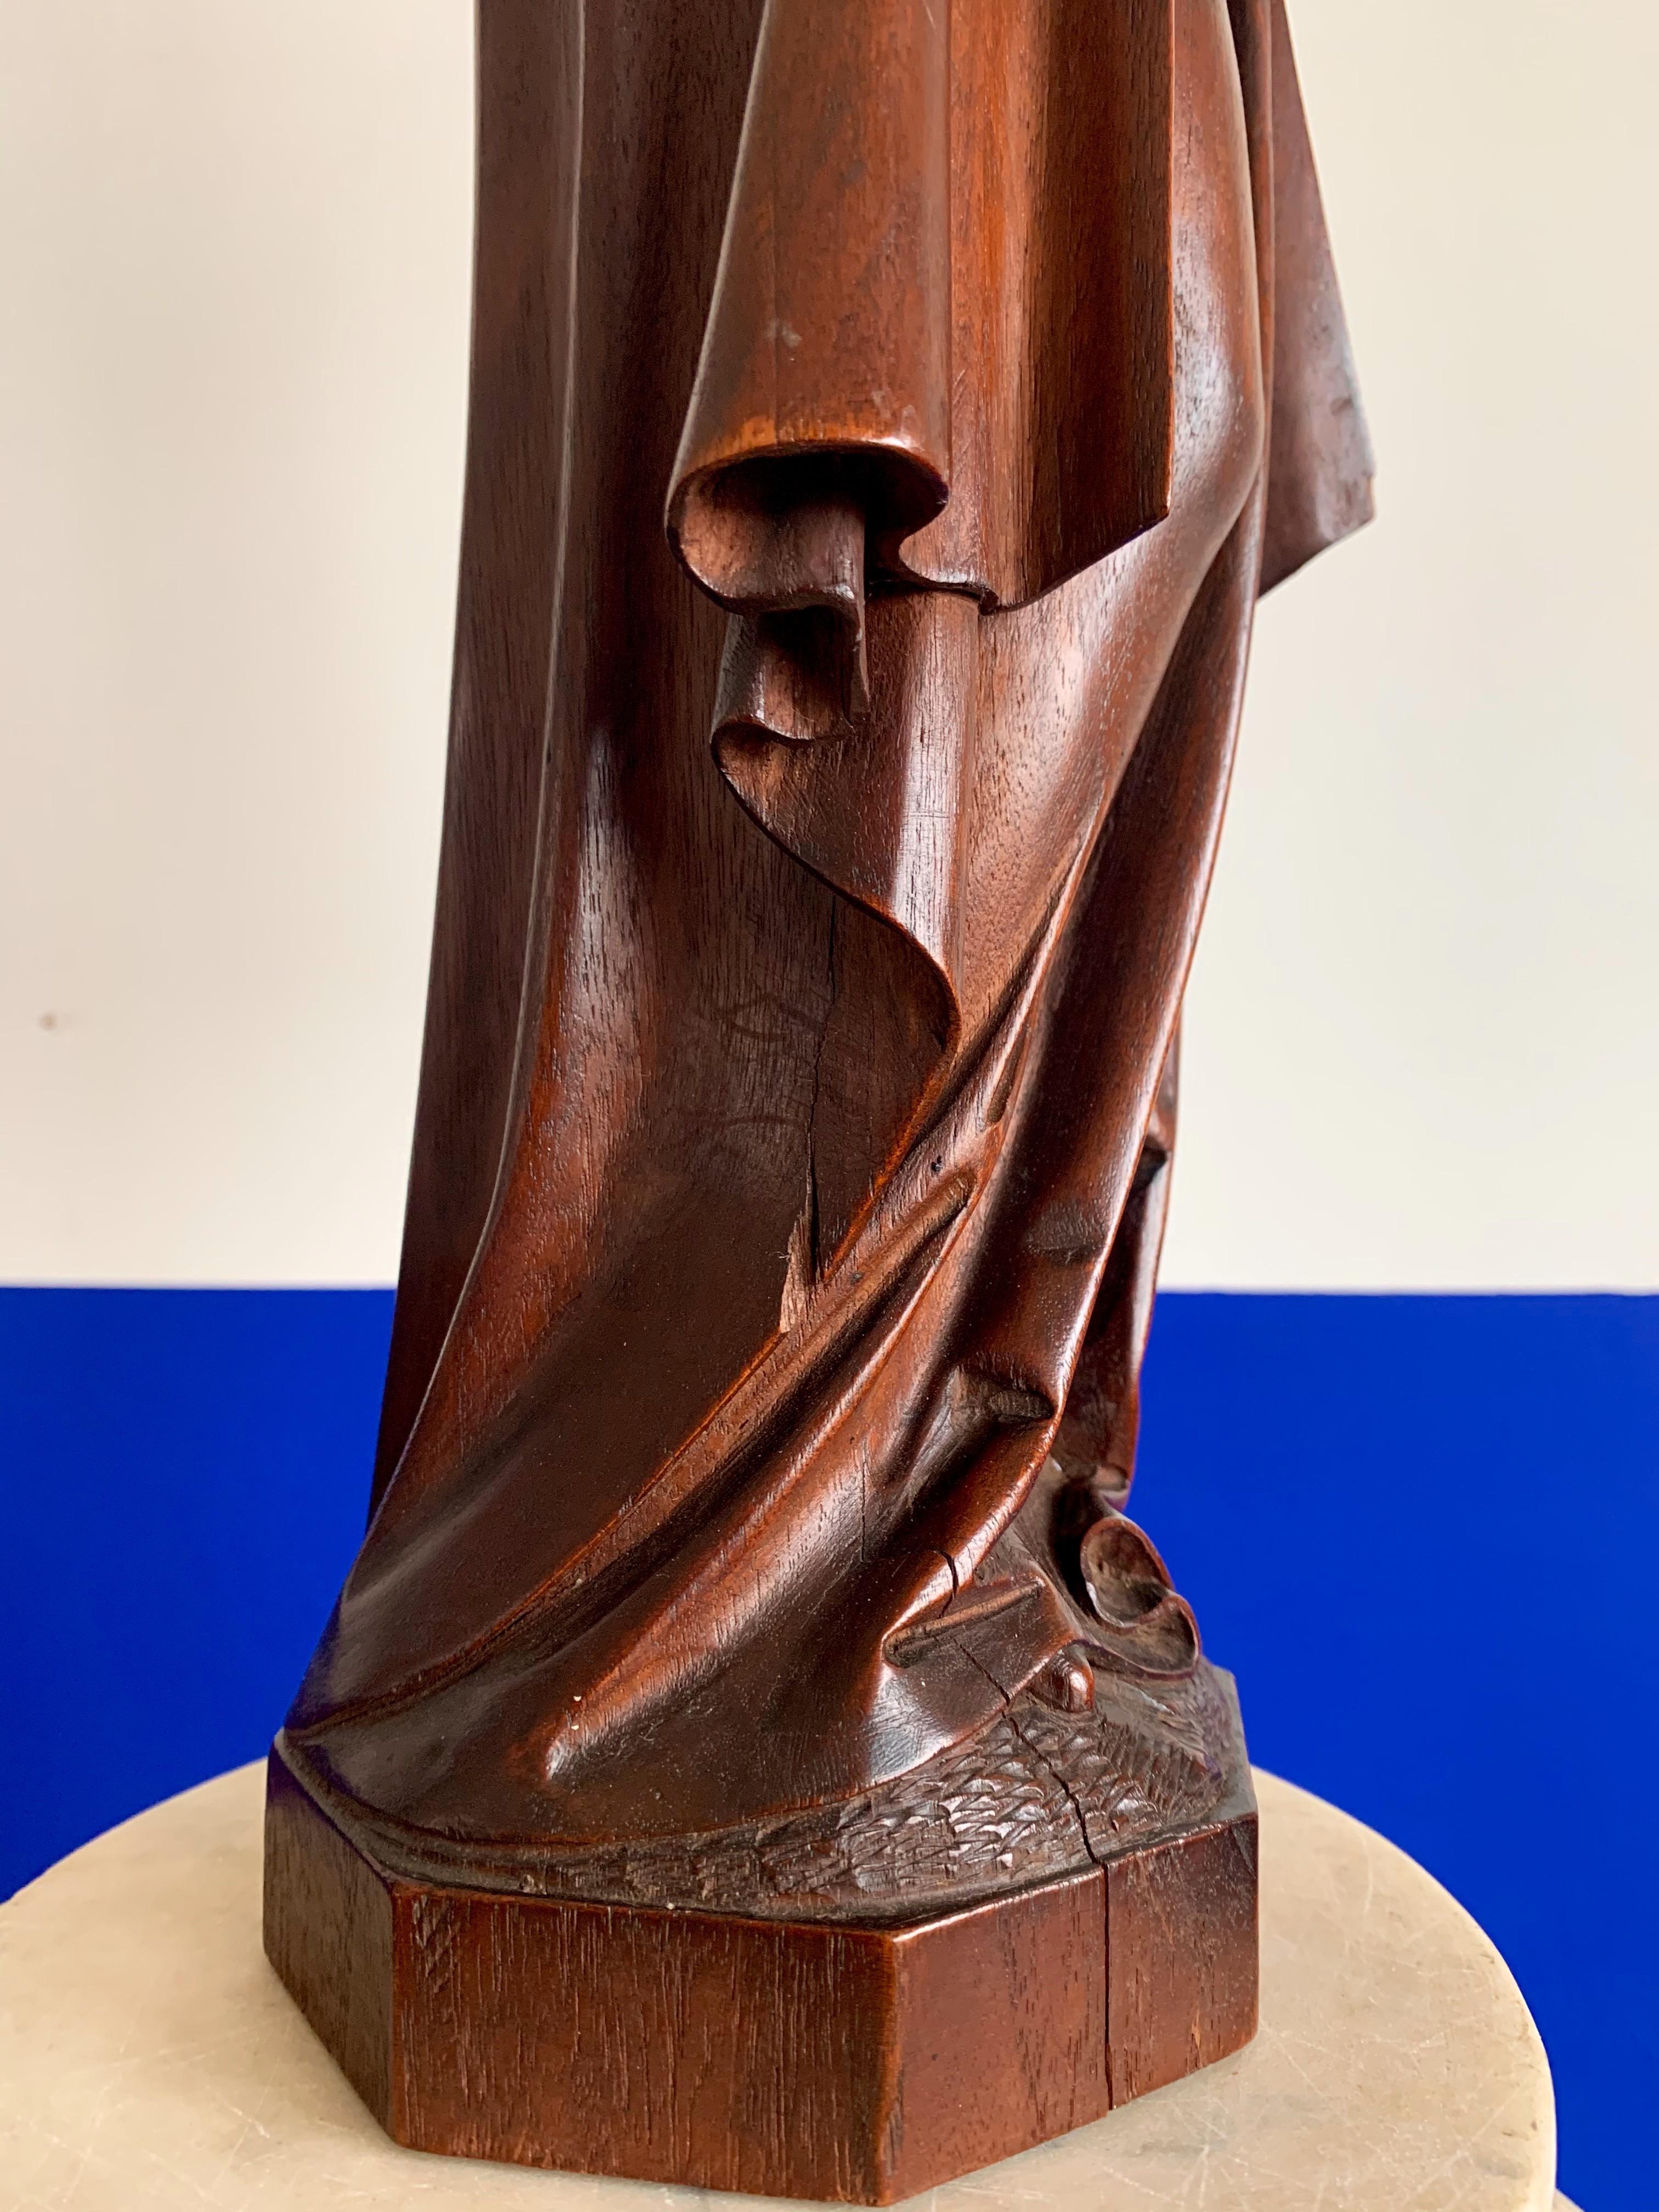 Carved Antique Wooden Statuette / Sculpture of Saint Teresa of Avila / Jesus 5